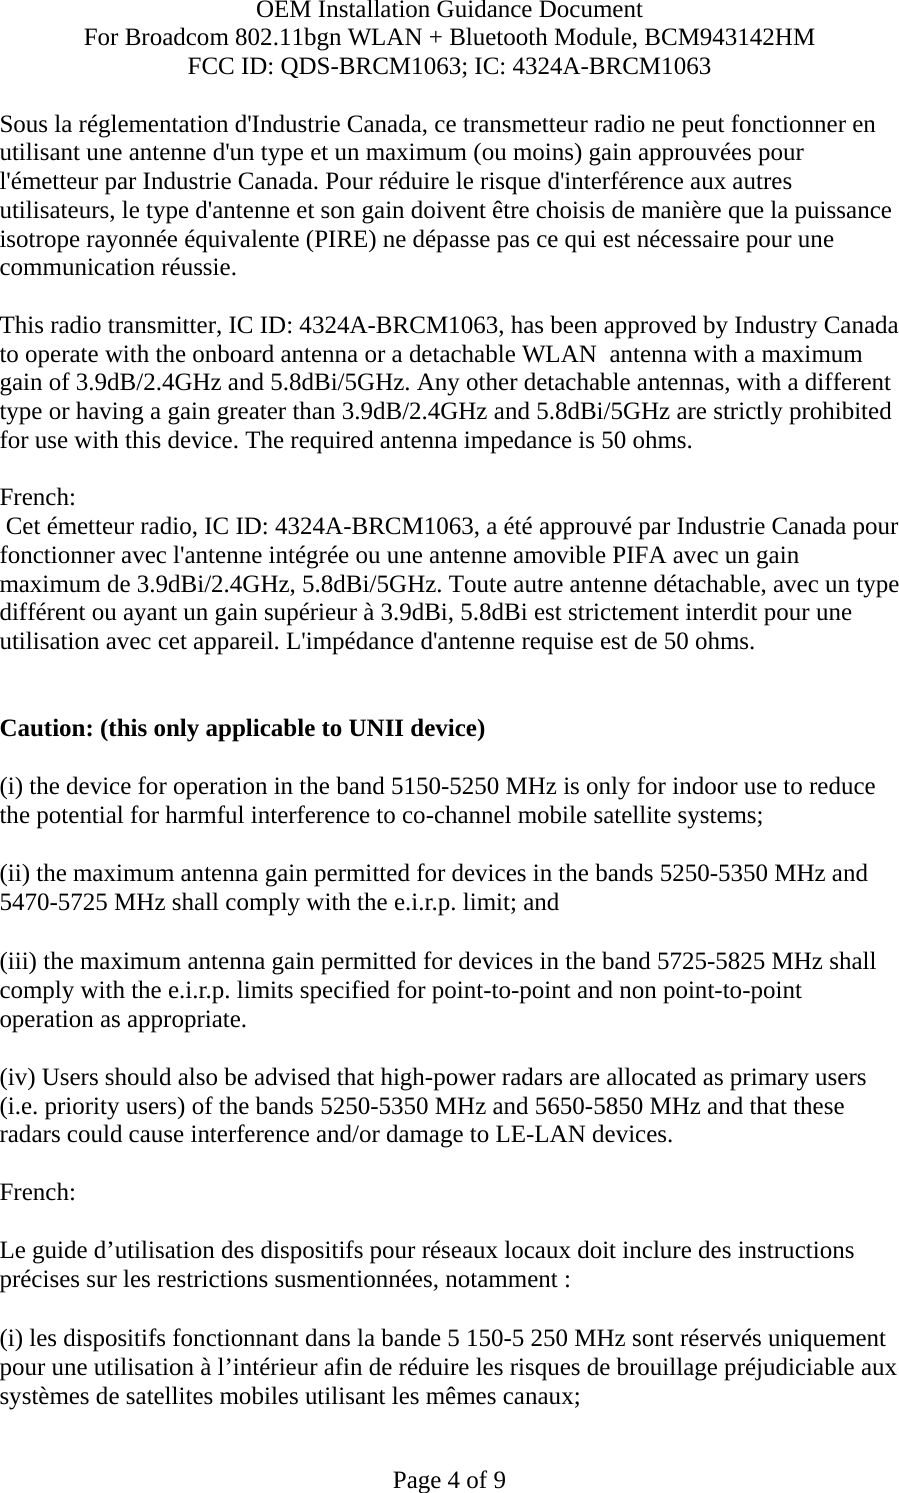 OEM Installation Guidance Document For Broadcom 802.11bgn WLAN + Bluetooth Module, BCM943142HM FCC ID: QDS-BRCM1063; IC: 4324A-BRCM1063  Page 4 of 9 Sous la réglementation d&apos;Industrie Canada, ce transmetteur radio ne peut fonctionner en utilisant une antenne d&apos;un type et un maximum (ou moins) gain approuvées pour l&apos;émetteur par Industrie Canada. Pour réduire le risque d&apos;interférence aux autres utilisateurs, le type d&apos;antenne et son gain doivent être choisis de manière que la puissance isotrope rayonnée équivalente (PIRE) ne dépasse pas ce qui est nécessaire pour une communication réussie.  This radio transmitter, IC ID: 4324A-BRCM1063, has been approved by Industry Canada to operate with the onboard antenna or a detachable WLAN  antenna with a maximum gain of 3.9dB/2.4GHz and 5.8dBi/5GHz. Any other detachable antennas, with a different type or having a gain greater than 3.9dB/2.4GHz and 5.8dBi/5GHz are strictly prohibited for use with this device. The required antenna impedance is 50 ohms.  French:   Cet émetteur radio, IC ID: 4324A-BRCM1063, a été approuvé par Industrie Canada pour fonctionner avec l&apos;antenne intégrée ou une antenne amovible PIFA avec un gain maximum de 3.9dBi/2.4GHz, 5.8dBi/5GHz. Toute autre antenne détachable, avec un type différent ou ayant un gain supérieur à 3.9dBi, 5.8dBi est strictement interdit pour une utilisation avec cet appareil. L&apos;impédance d&apos;antenne requise est de 50 ohms.   Caution: (this only applicable to UNII device) (i) the device for operation in the band 5150-5250 MHz is only for indoor use to reduce the potential for harmful interference to co-channel mobile satellite systems; (ii) the maximum antenna gain permitted for devices in the bands 5250-5350 MHz and 5470-5725 MHz shall comply with the e.i.r.p. limit; and (iii) the maximum antenna gain permitted for devices in the band 5725-5825 MHz shall comply with the e.i.r.p. limits specified for point-to-point and non point-to-point operation as appropriate. (iv) Users should also be advised that high-power radars are allocated as primary users (i.e. priority users) of the bands 5250-5350 MHz and 5650-5850 MHz and that these radars could cause interference and/or damage to LE-LAN devices.  French:  Le guide d’utilisation des dispositifs pour réseaux locaux doit inclure des instructions précises sur les restrictions susmentionnées, notamment : (i) les dispositifs fonctionnant dans la bande 5 150-5 250 MHz sont réservés uniquement pour une utilisation à l’intérieur afin de réduire les risques de brouillage préjudiciable aux systèmes de satellites mobiles utilisant les mêmes canaux; 